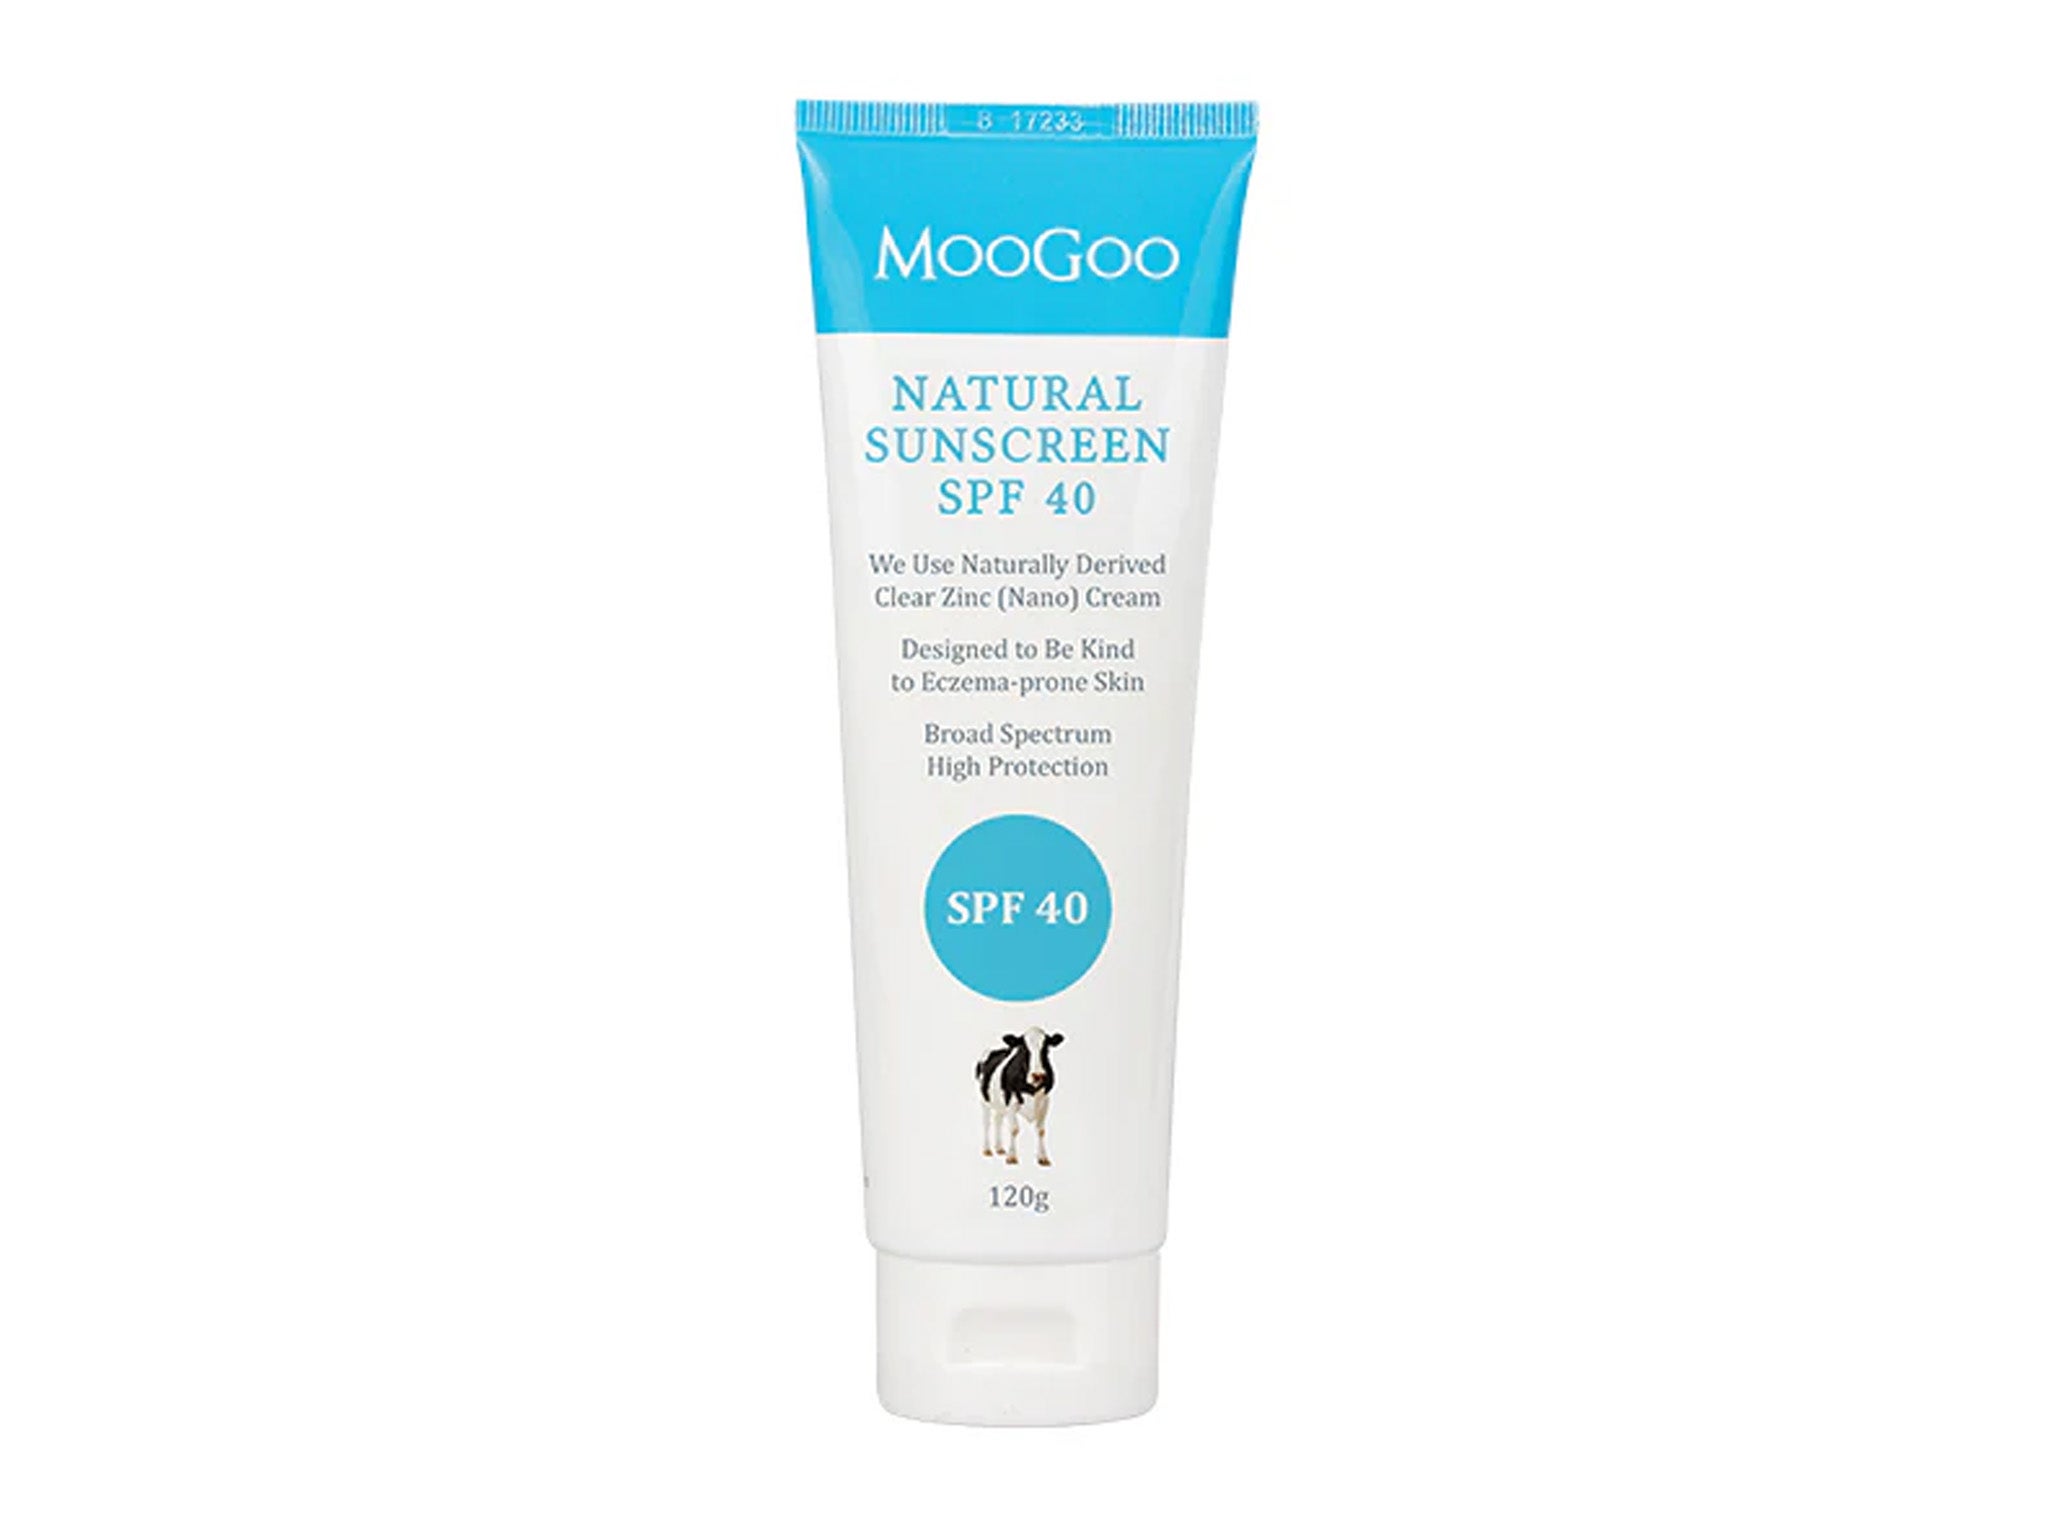 MooGoo natural sunscreen SPF 40